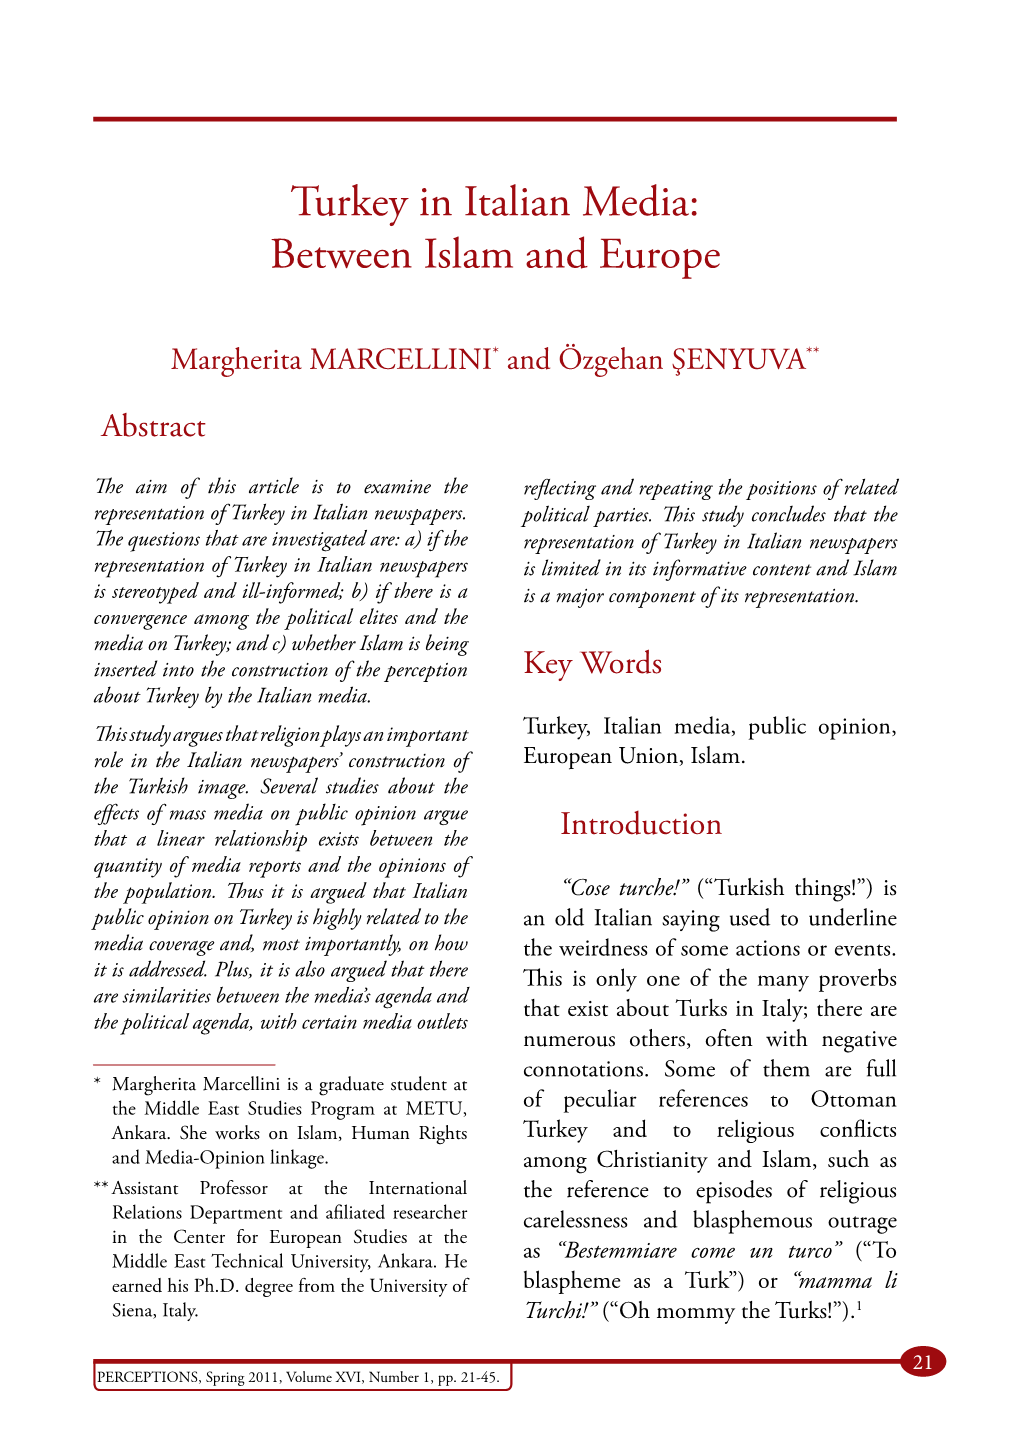 Turkey in Italian Media: Between Islam and Europe